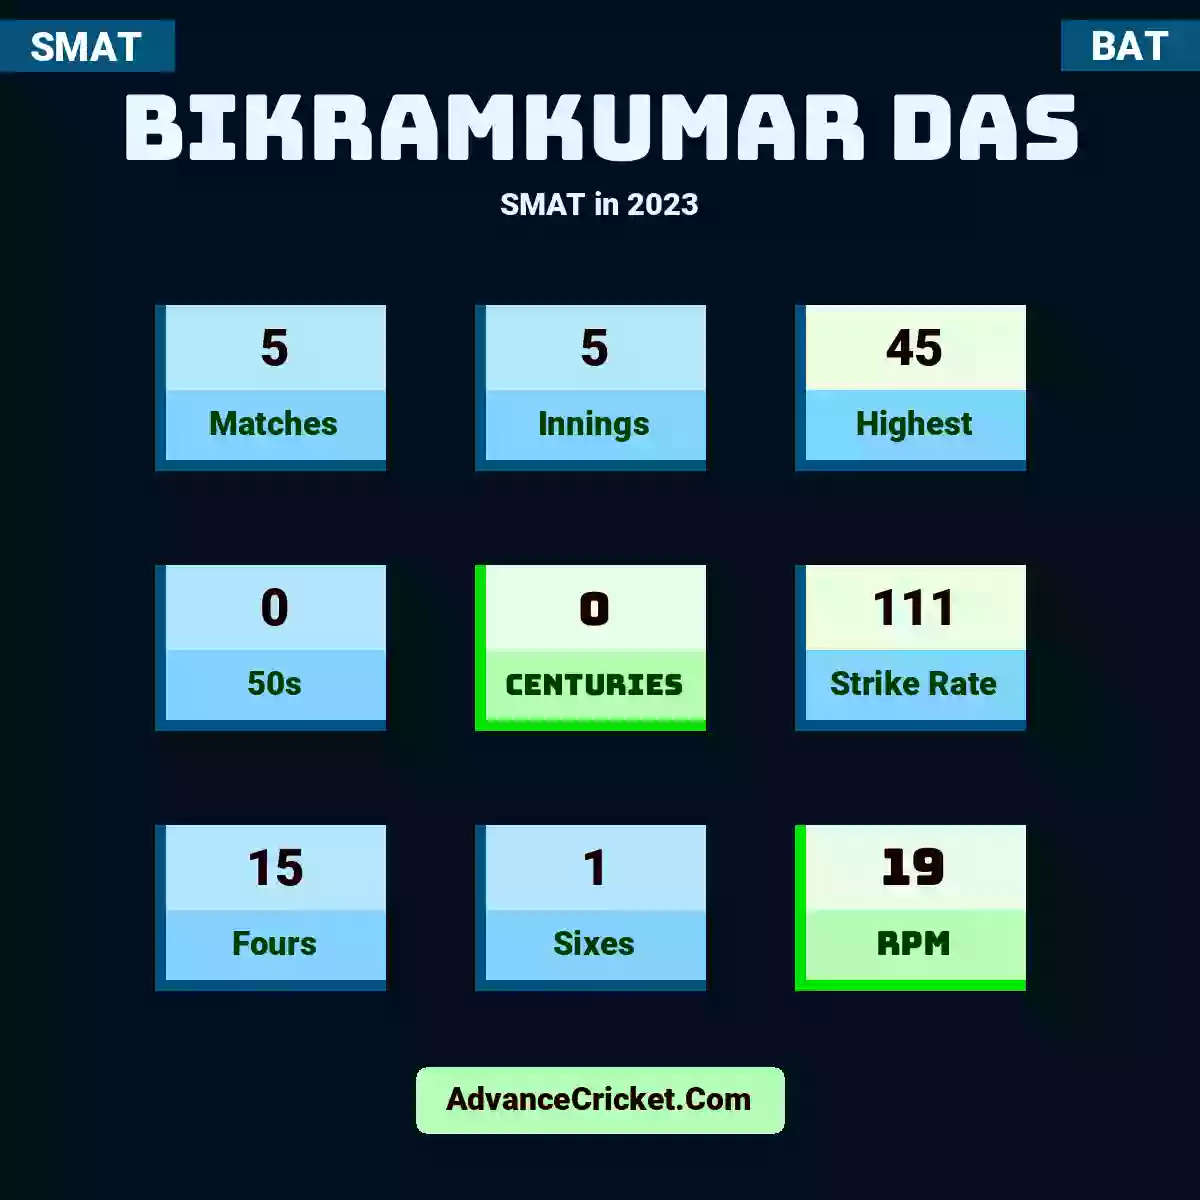 Bikramkumar Das SMAT  in 2023, Bikramkumar Das played 5 matches, scored 45 runs as highest, 0 half-centuries, and 0 centuries, with a strike rate of 111. B.Das hit 15 fours and 1 sixes, with an RPM of 19.